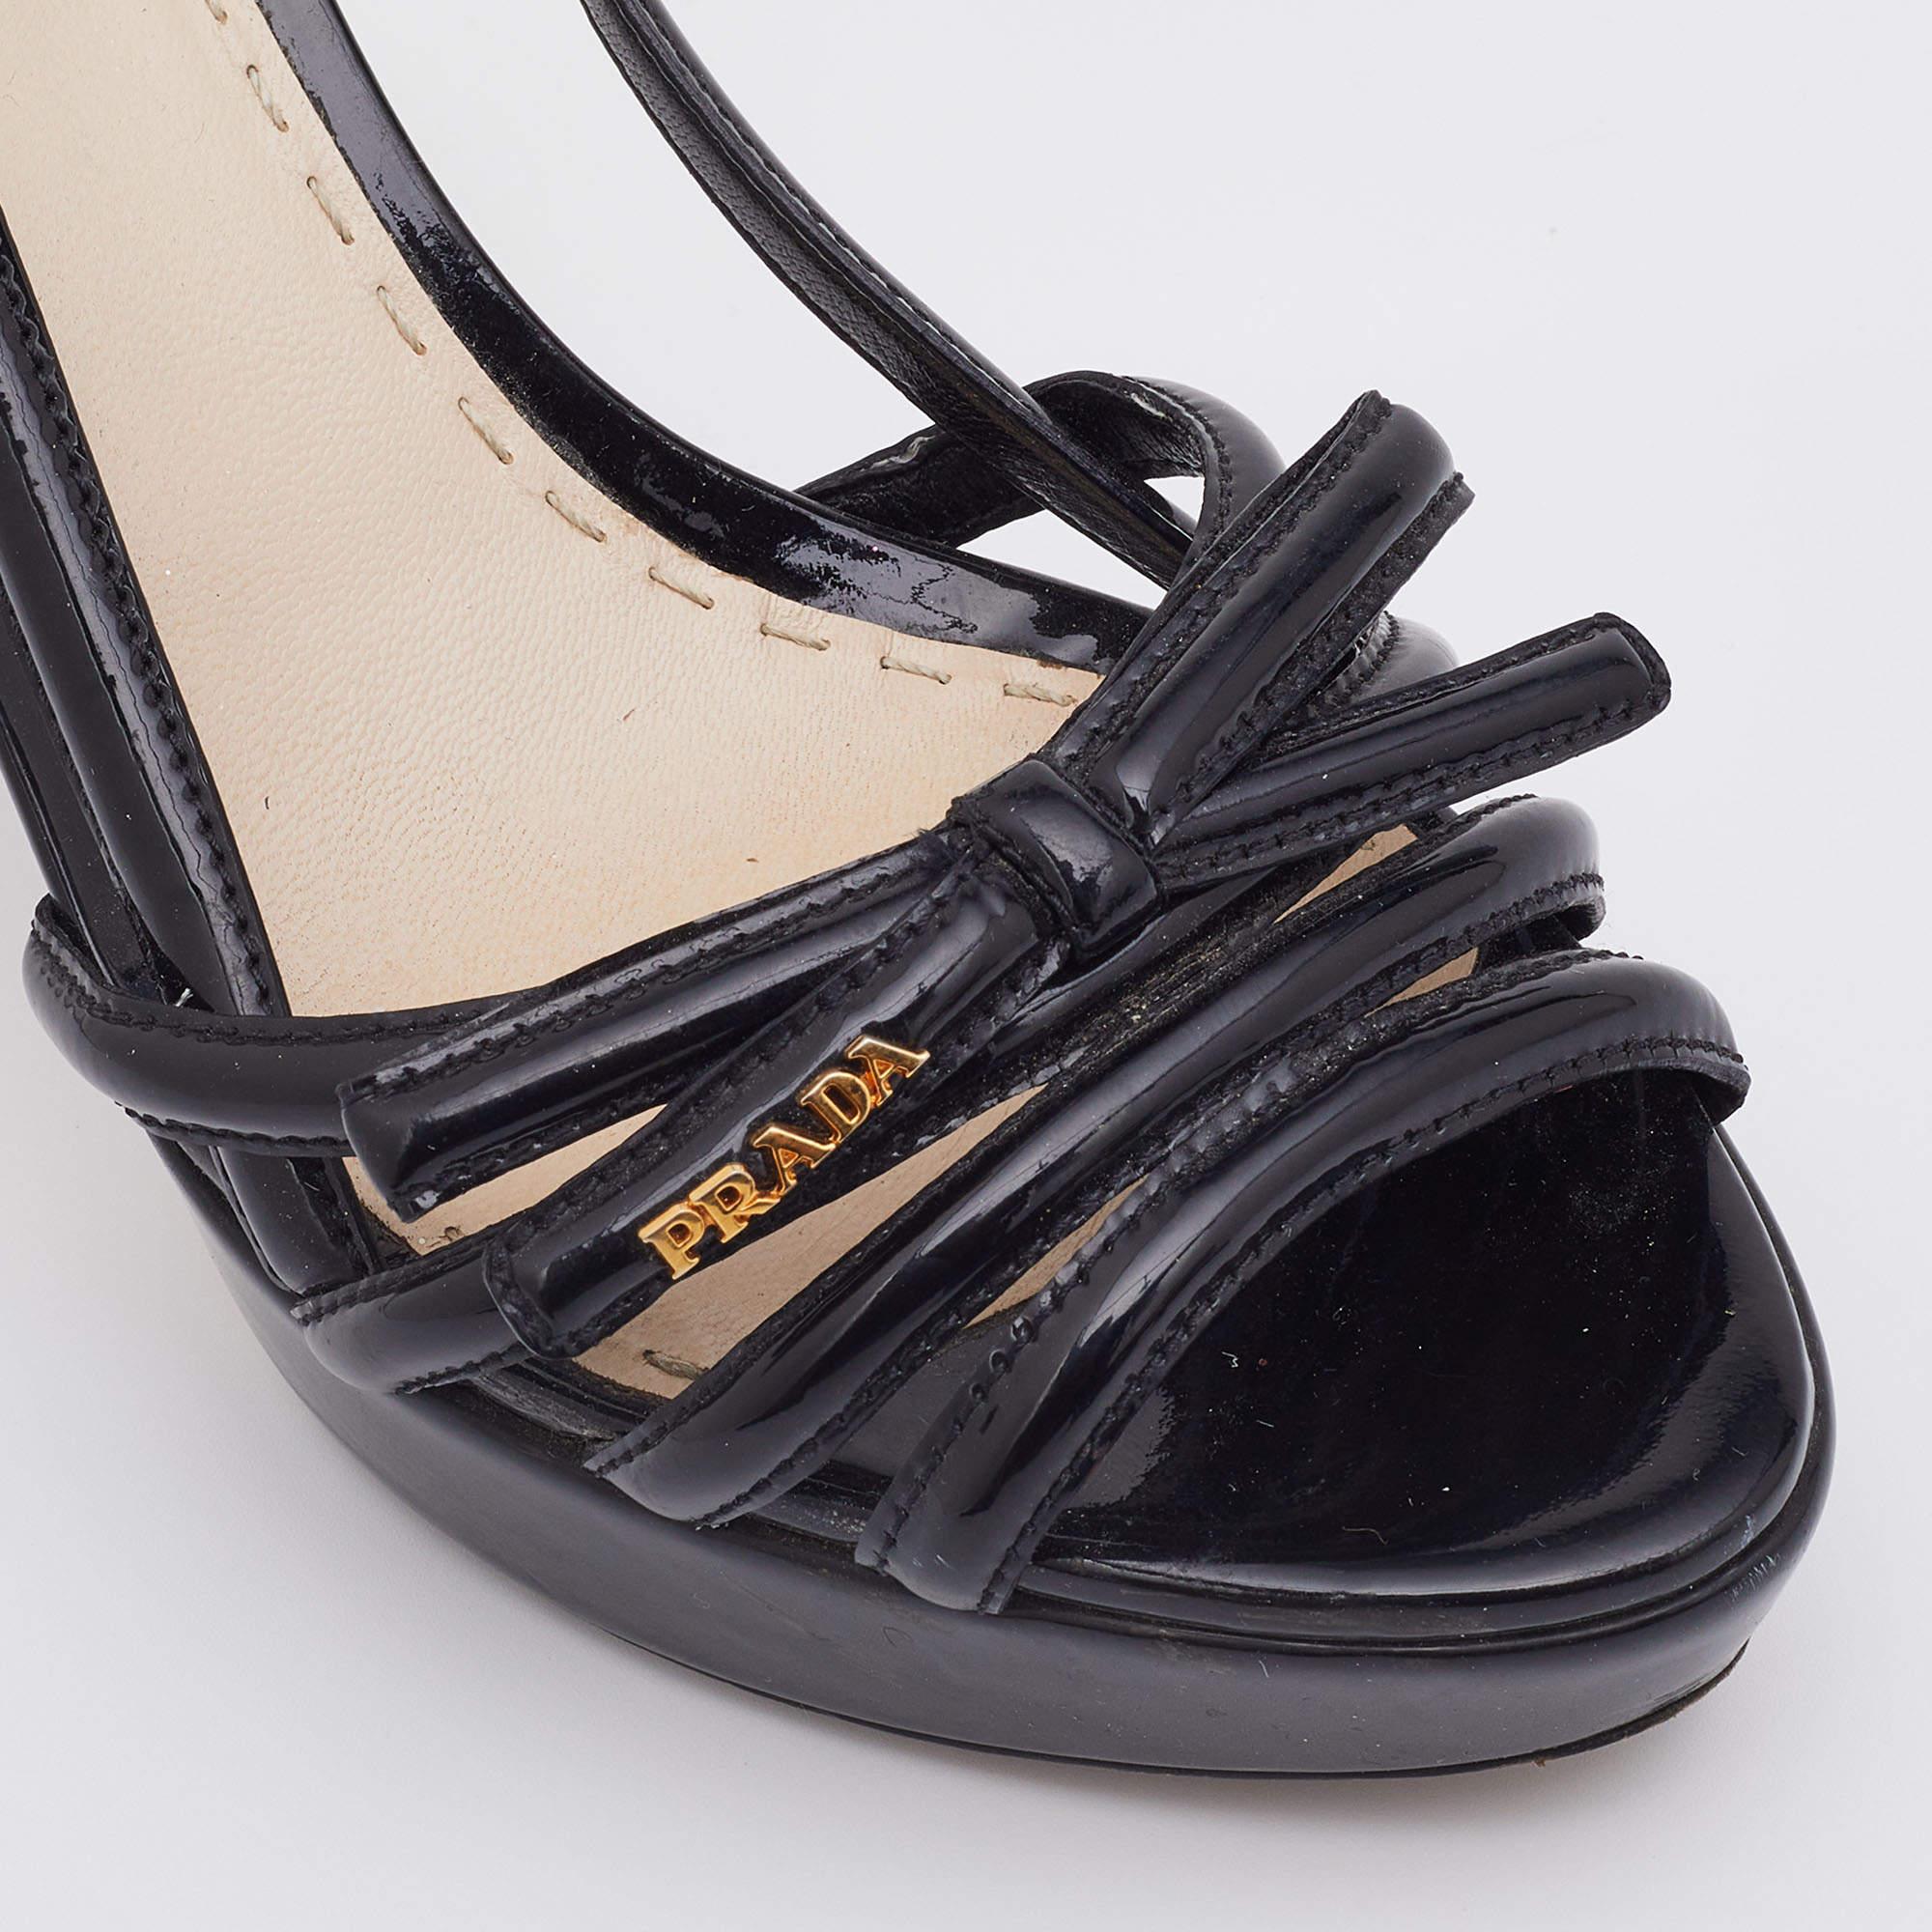 Prada Black Patent Leather Strappy Platform Sandals Size 40 3